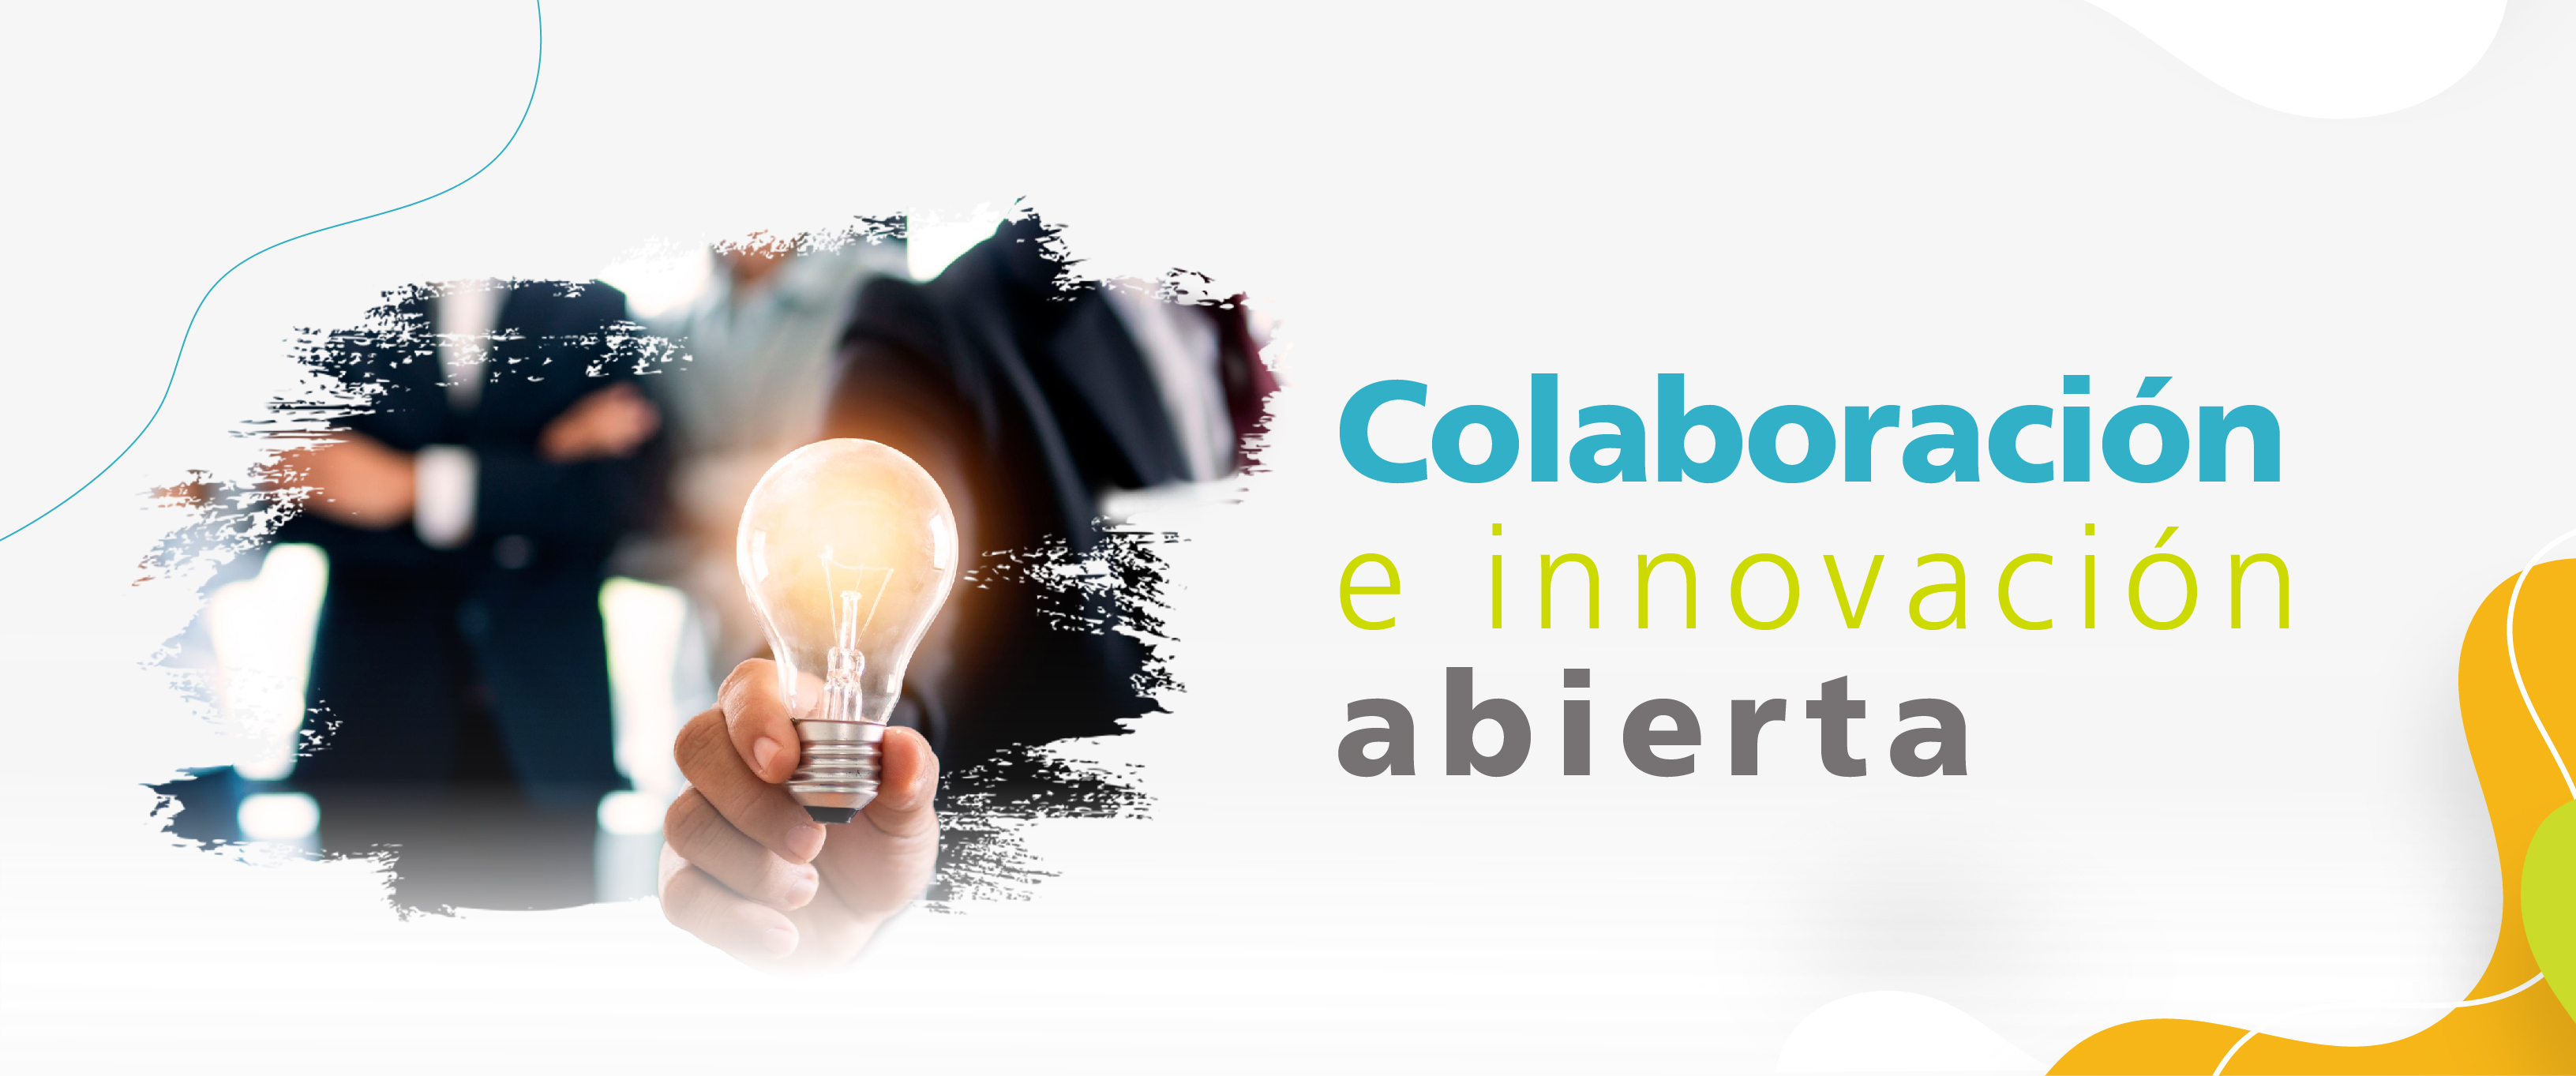 Colaboracion e innovacion